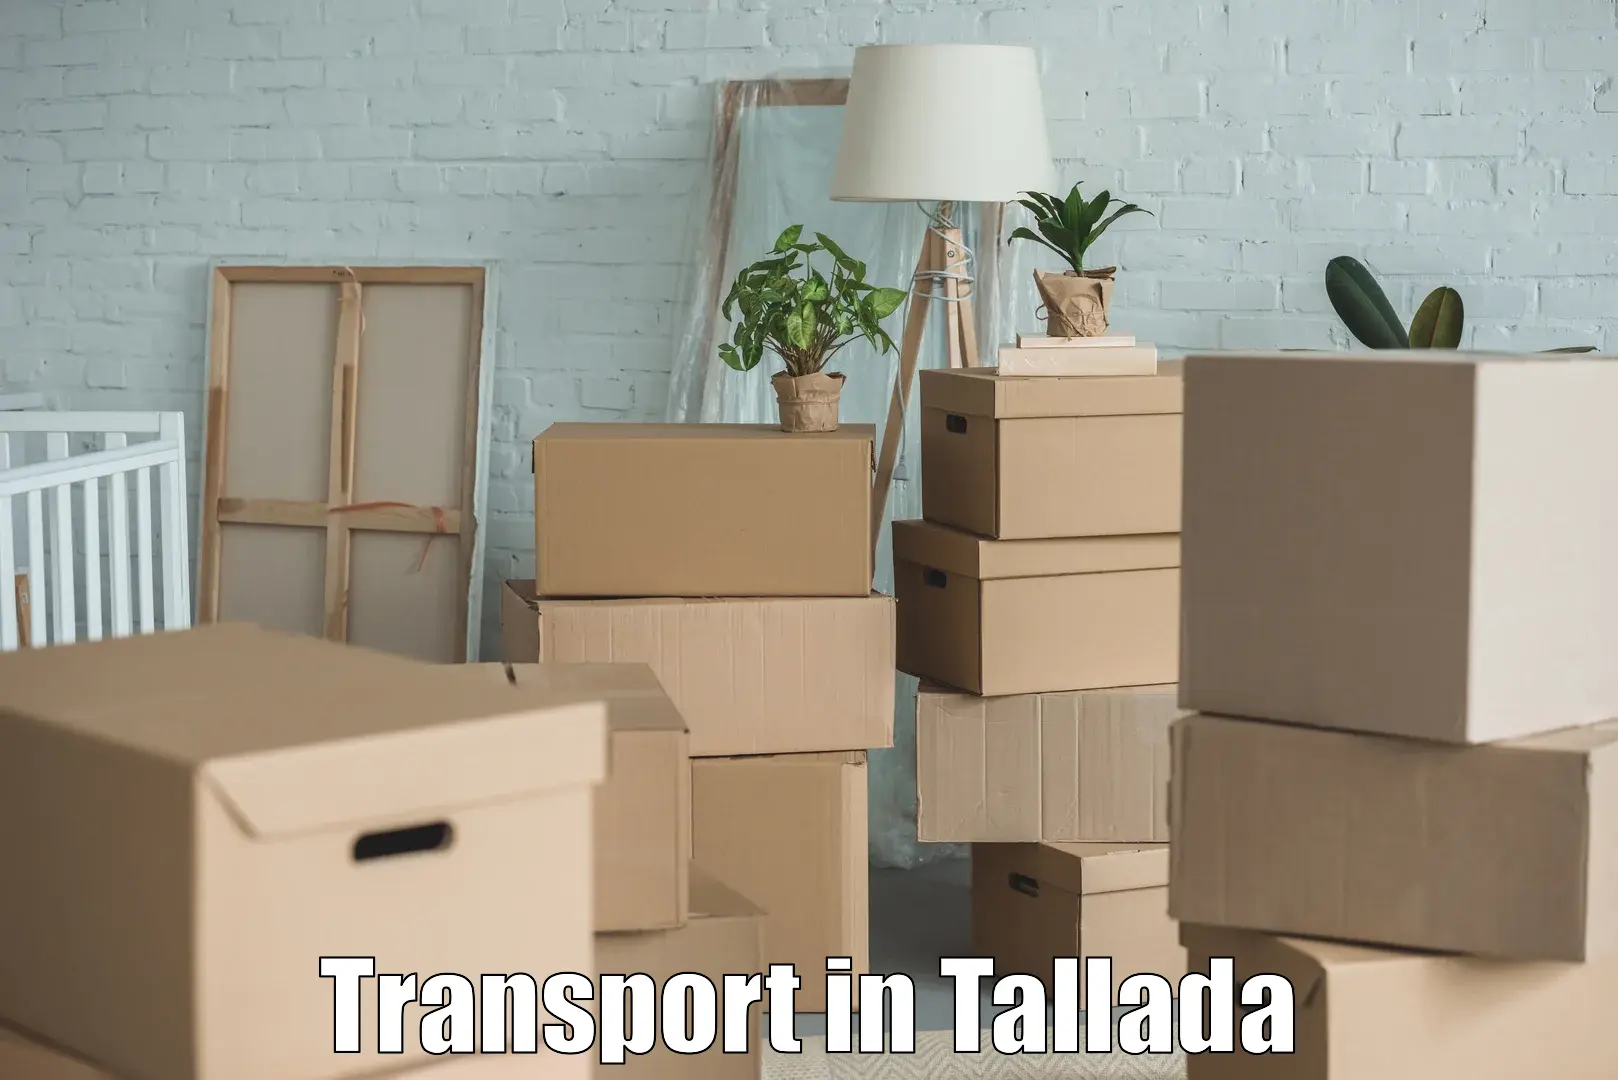 Container transport service in Tallada